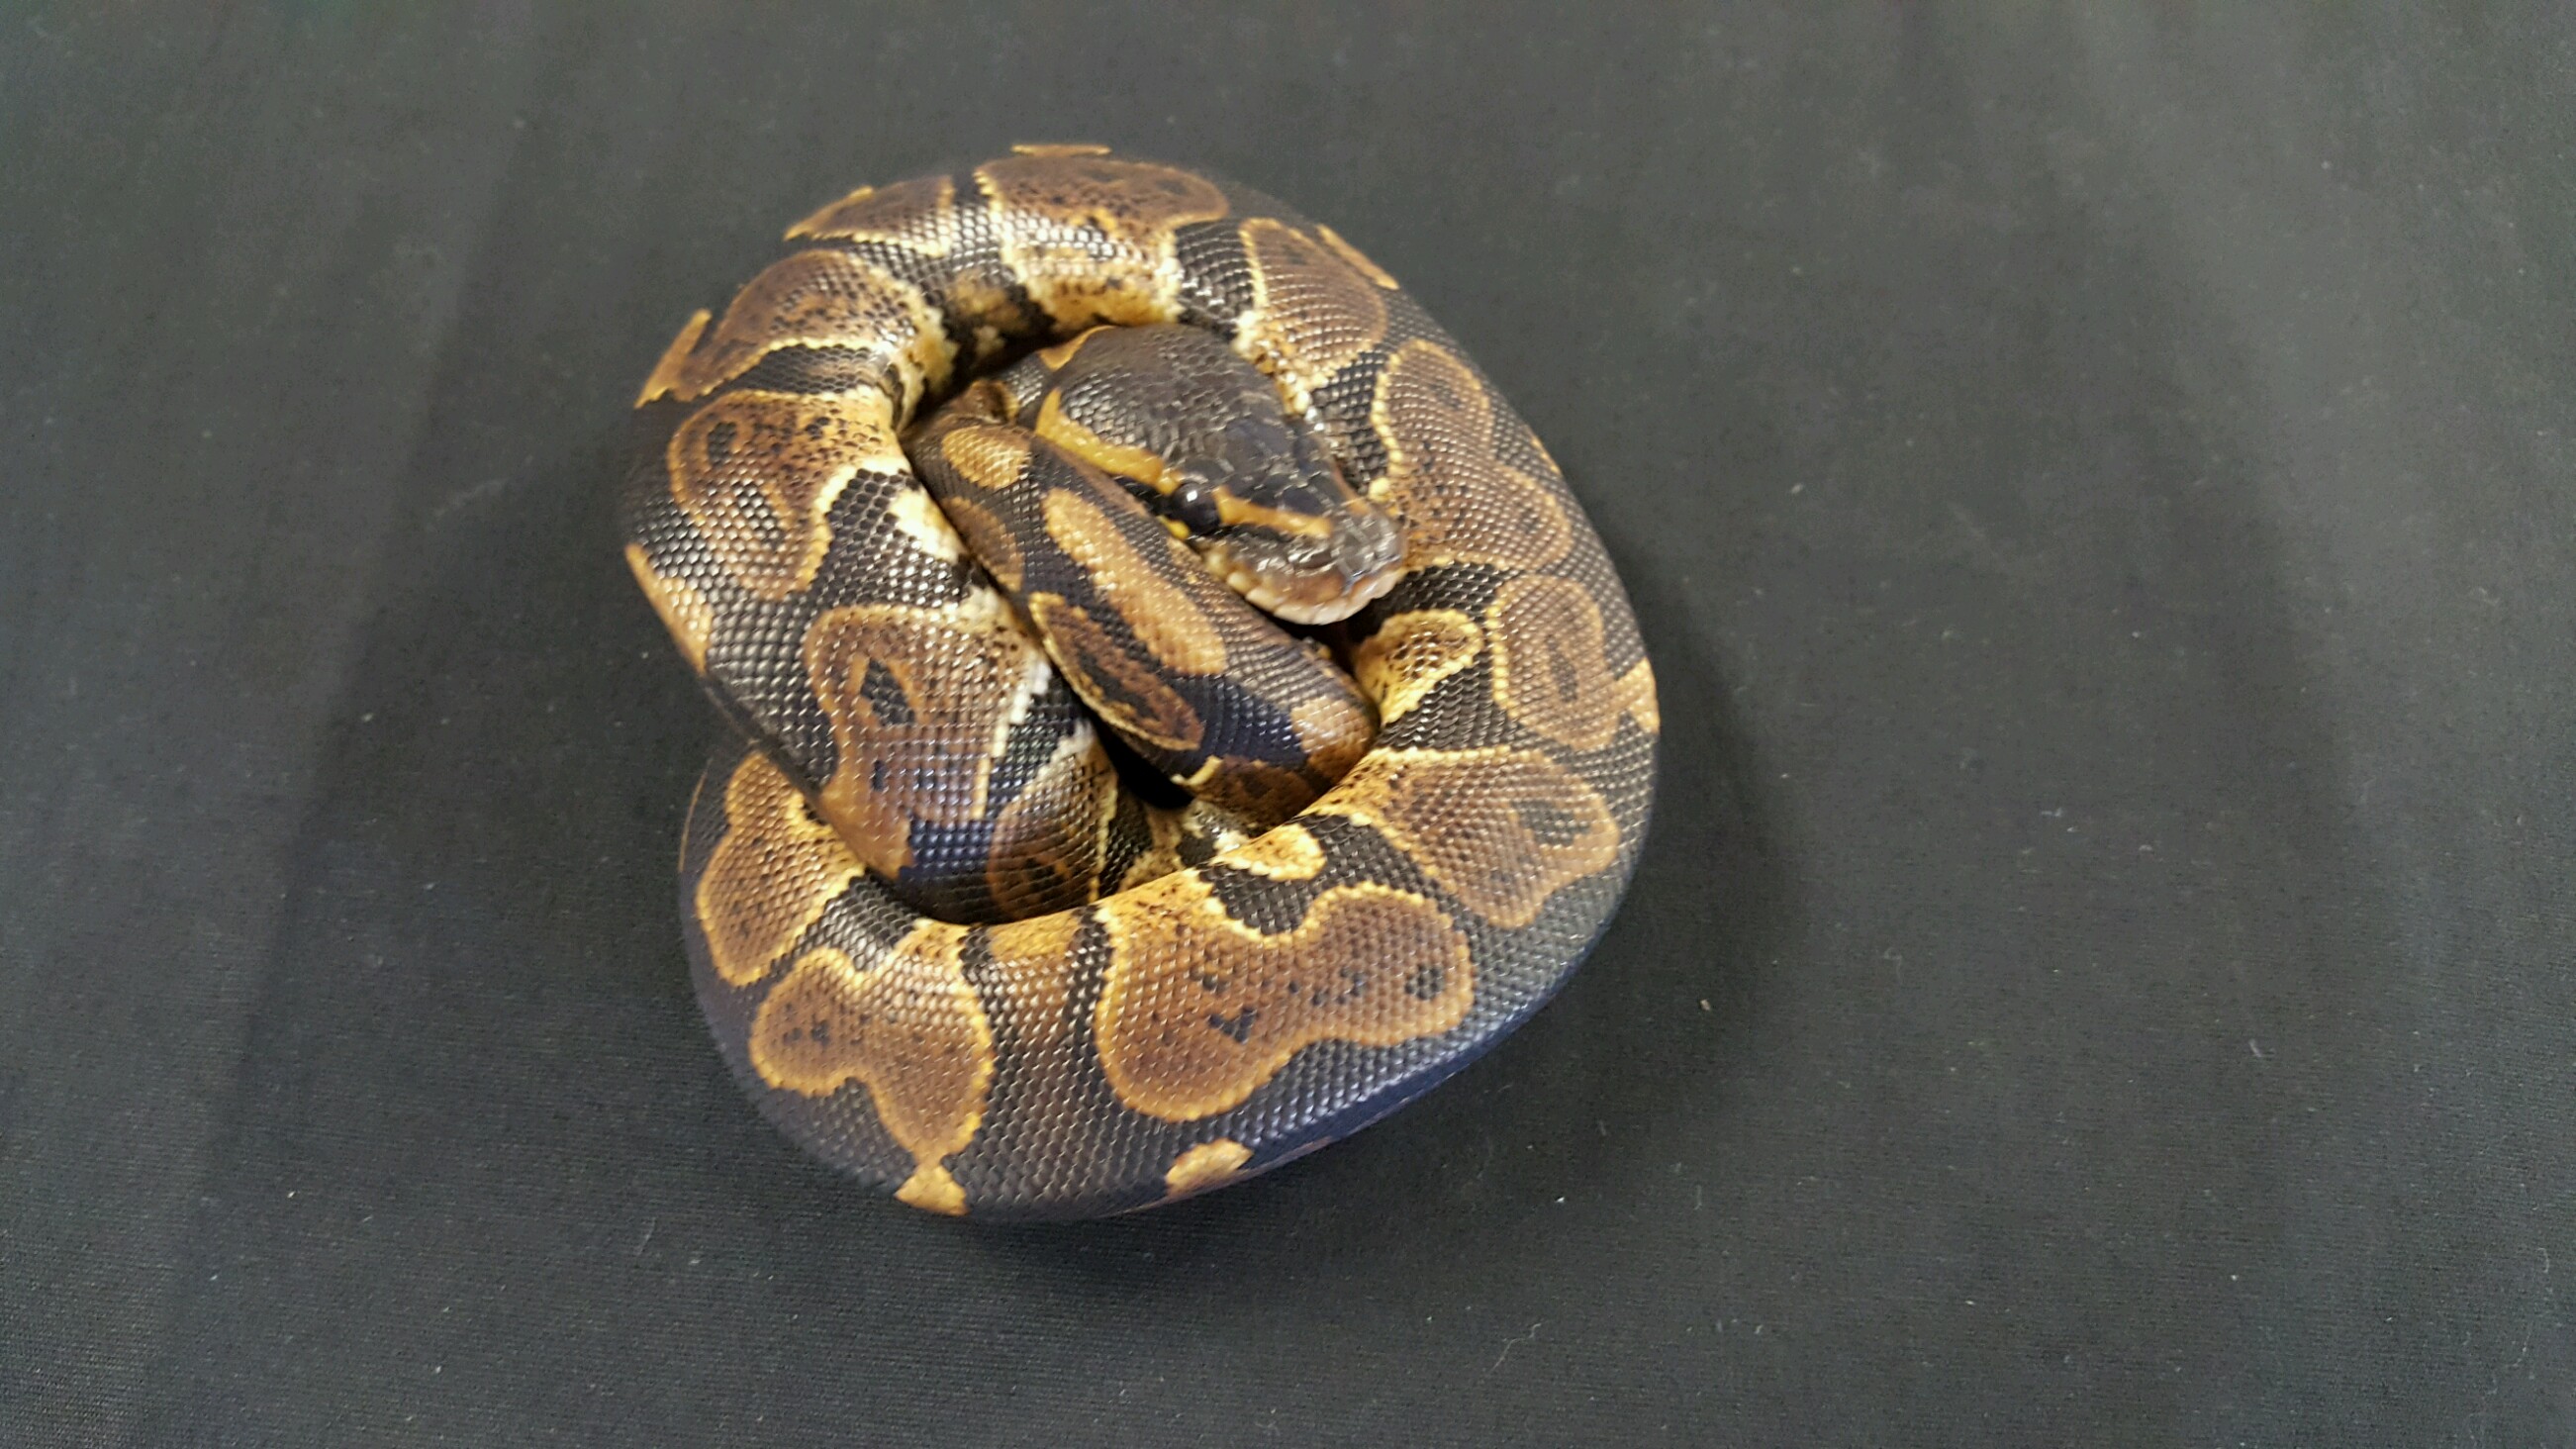 Satin Ball Python by A-List Animals